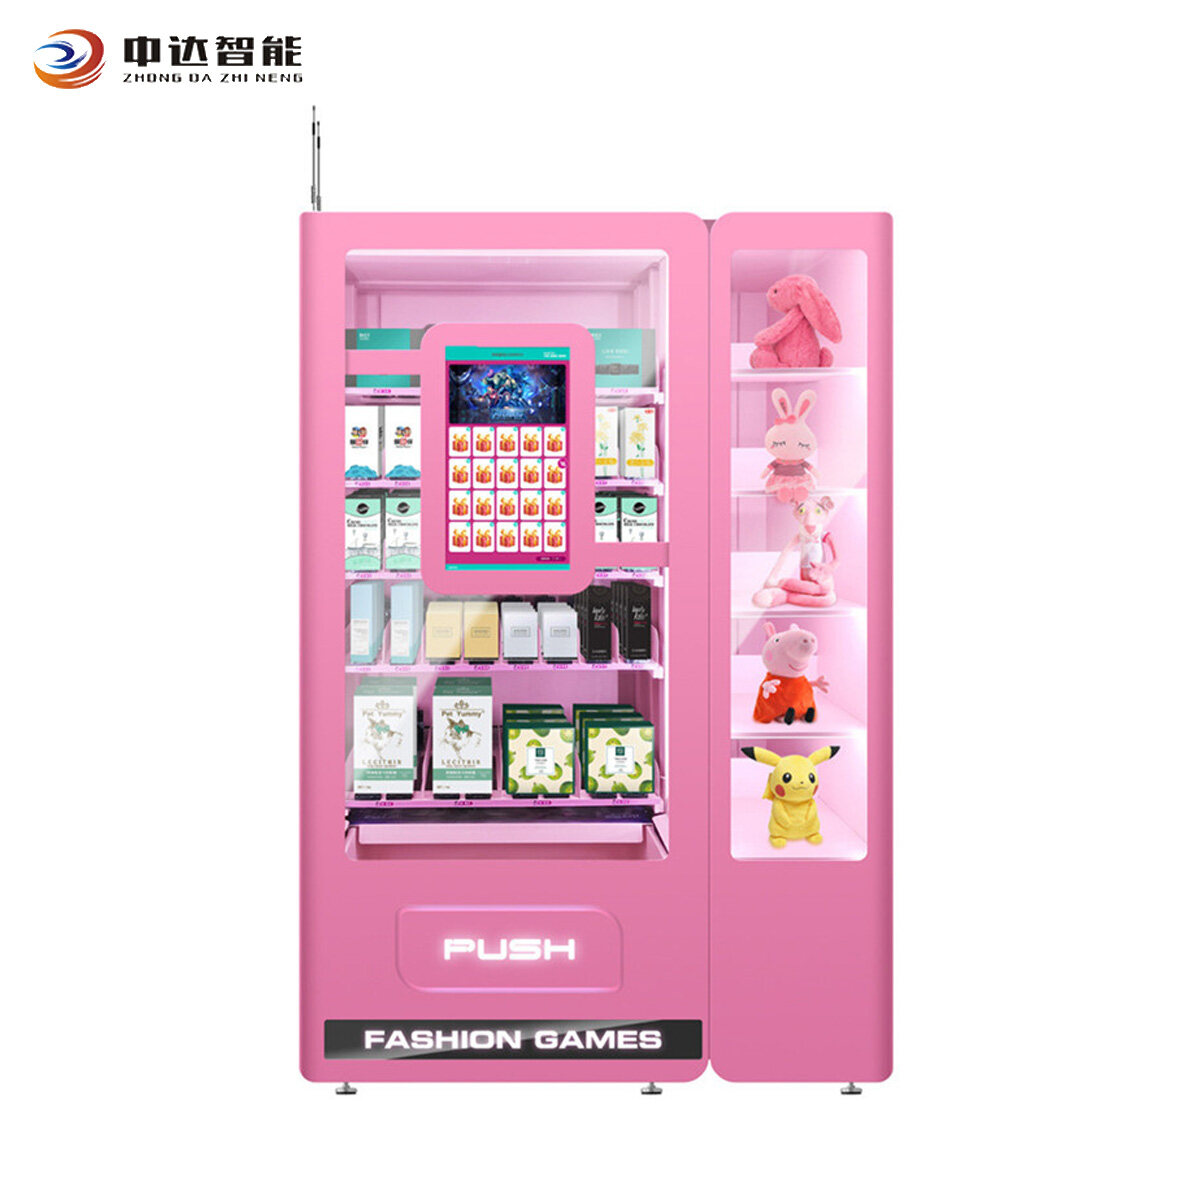 Toy Vending Machine Blind Box Vending Machine wigs vending machine Clothing Vending Machine